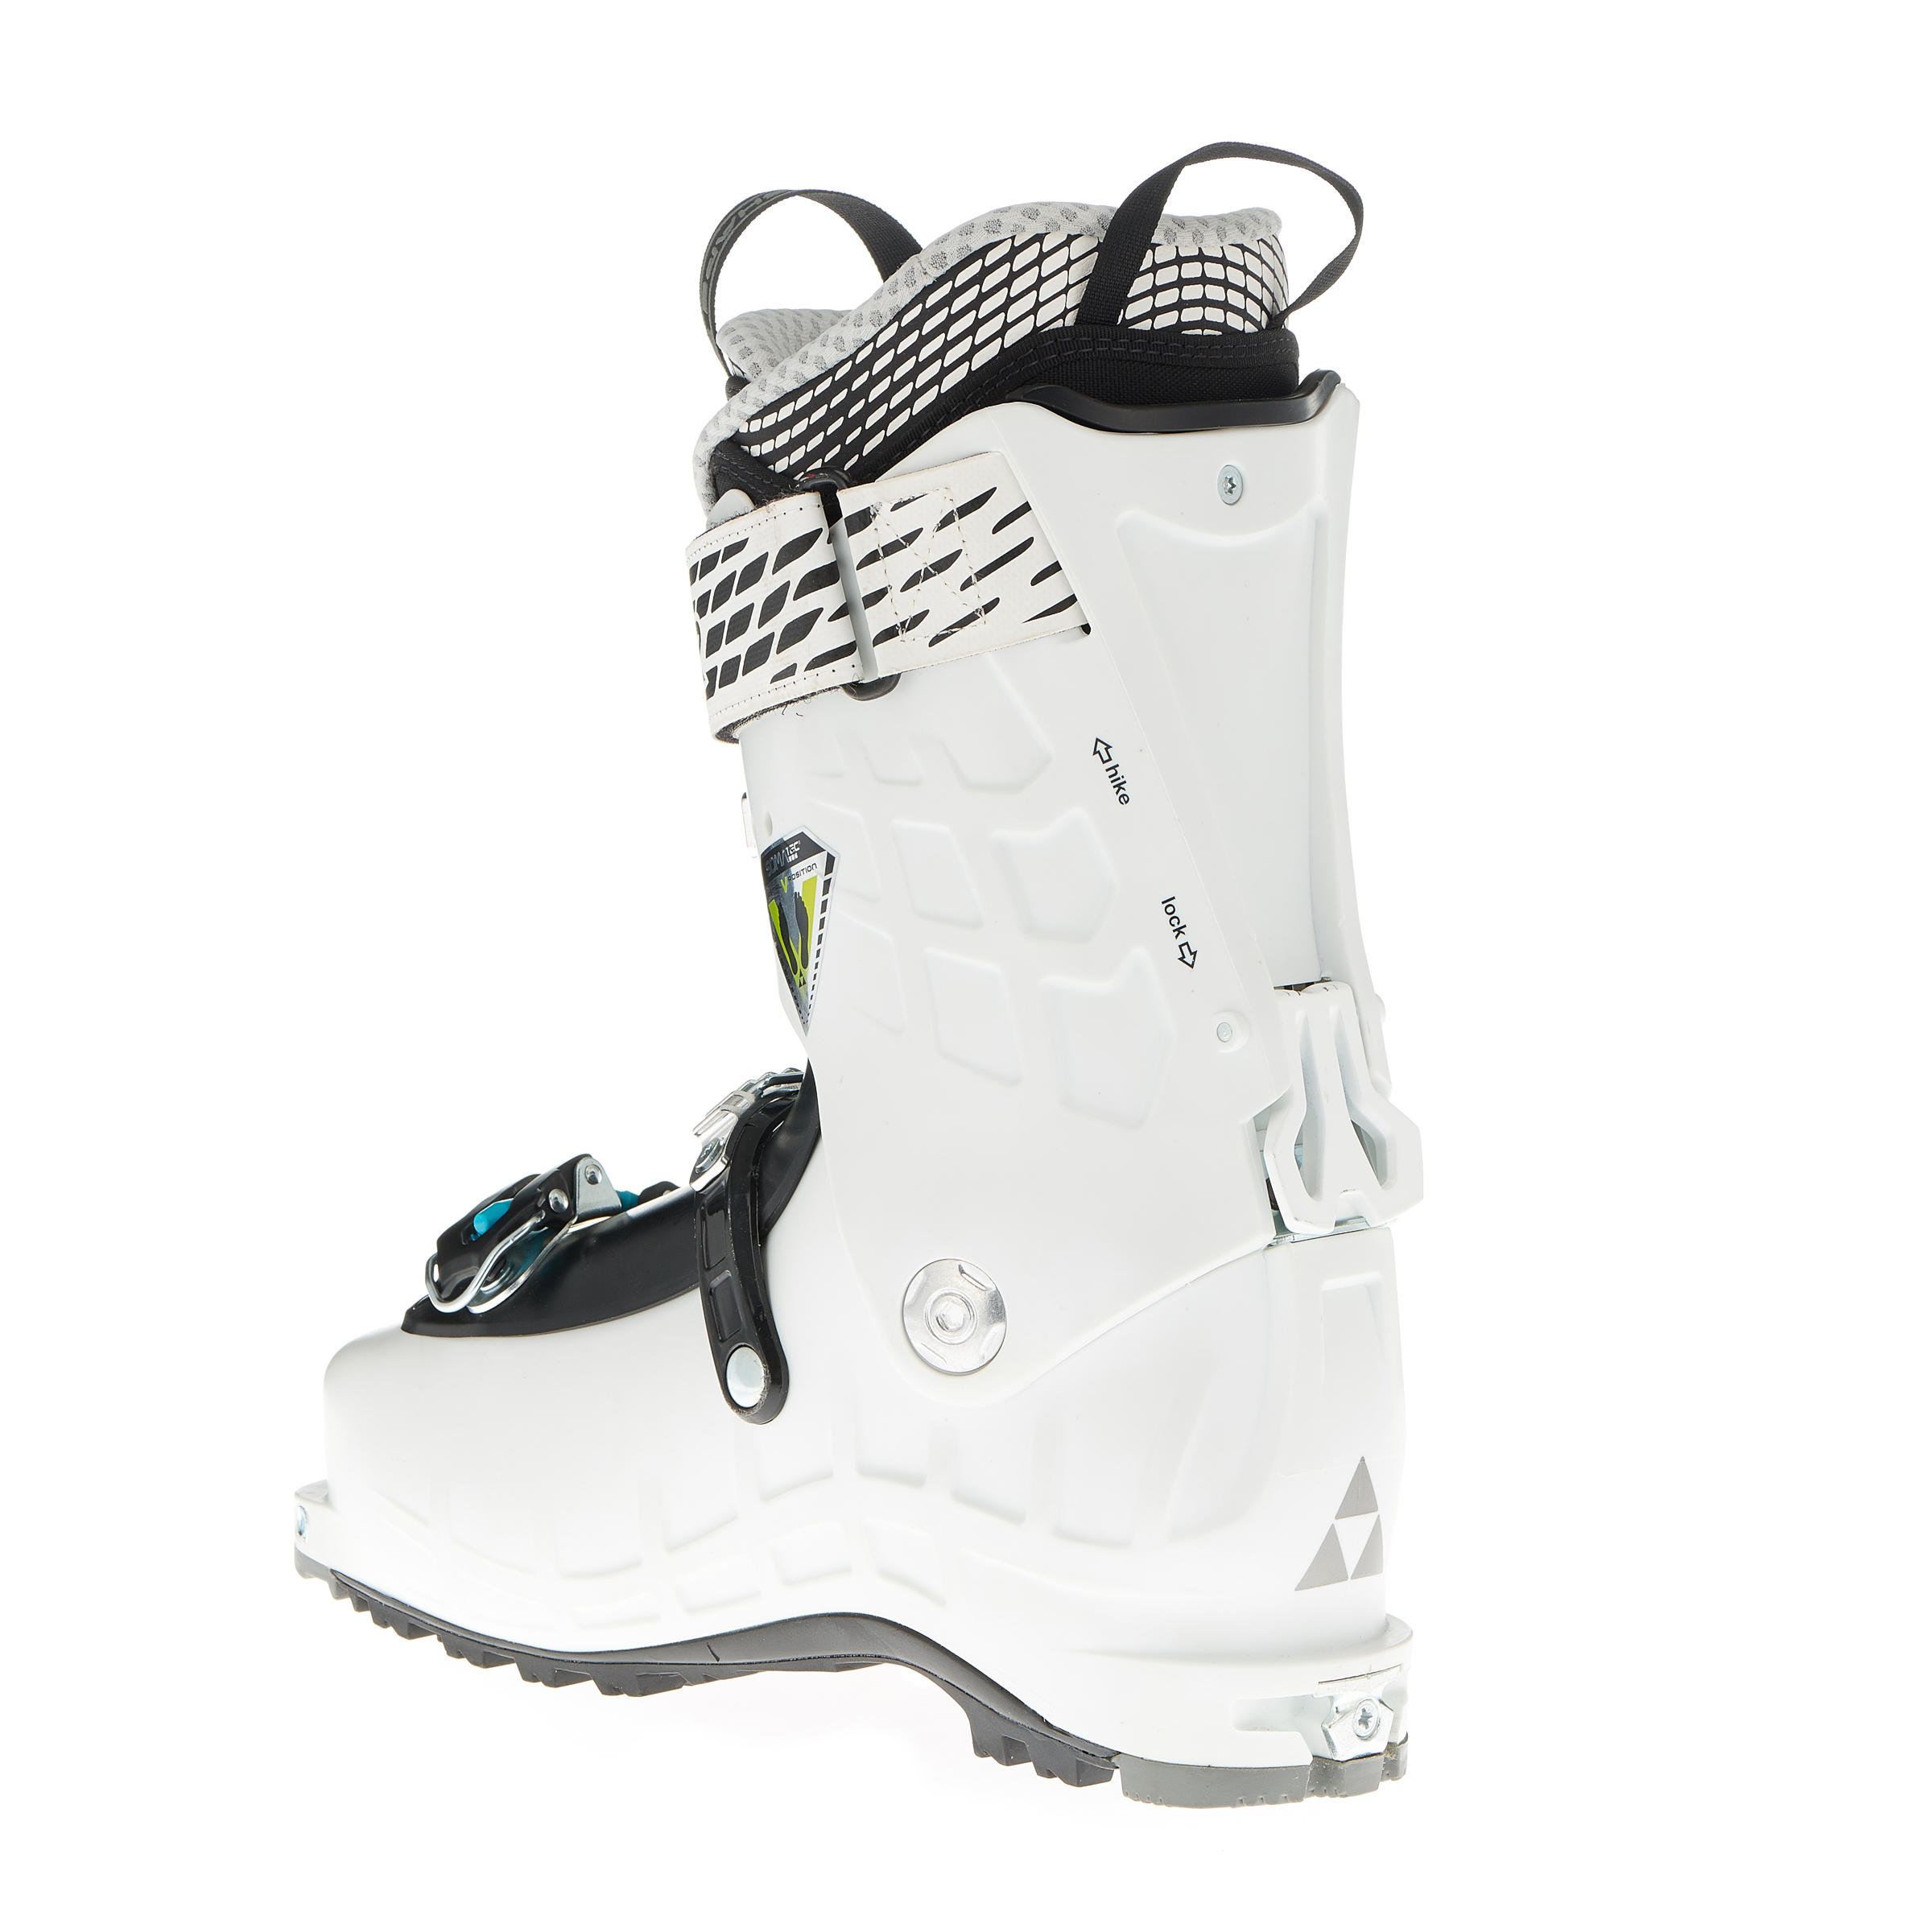 Transalp Women's Cross-Country Skiing Boots 3/15